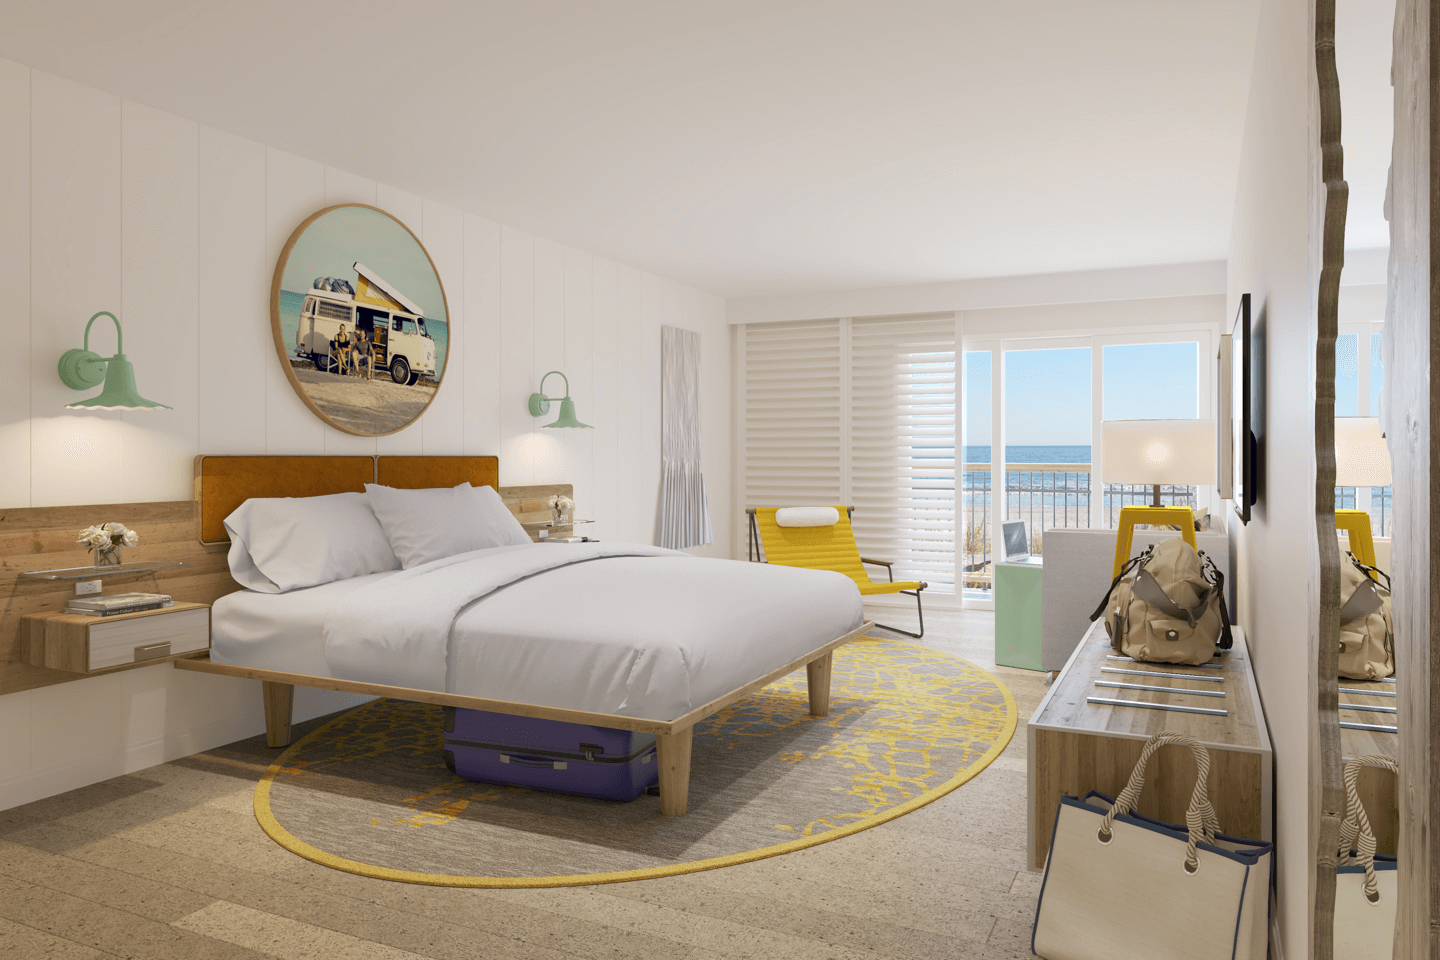 2019-OceanParkInn-Hotel-GuestroomEntry-Renovation